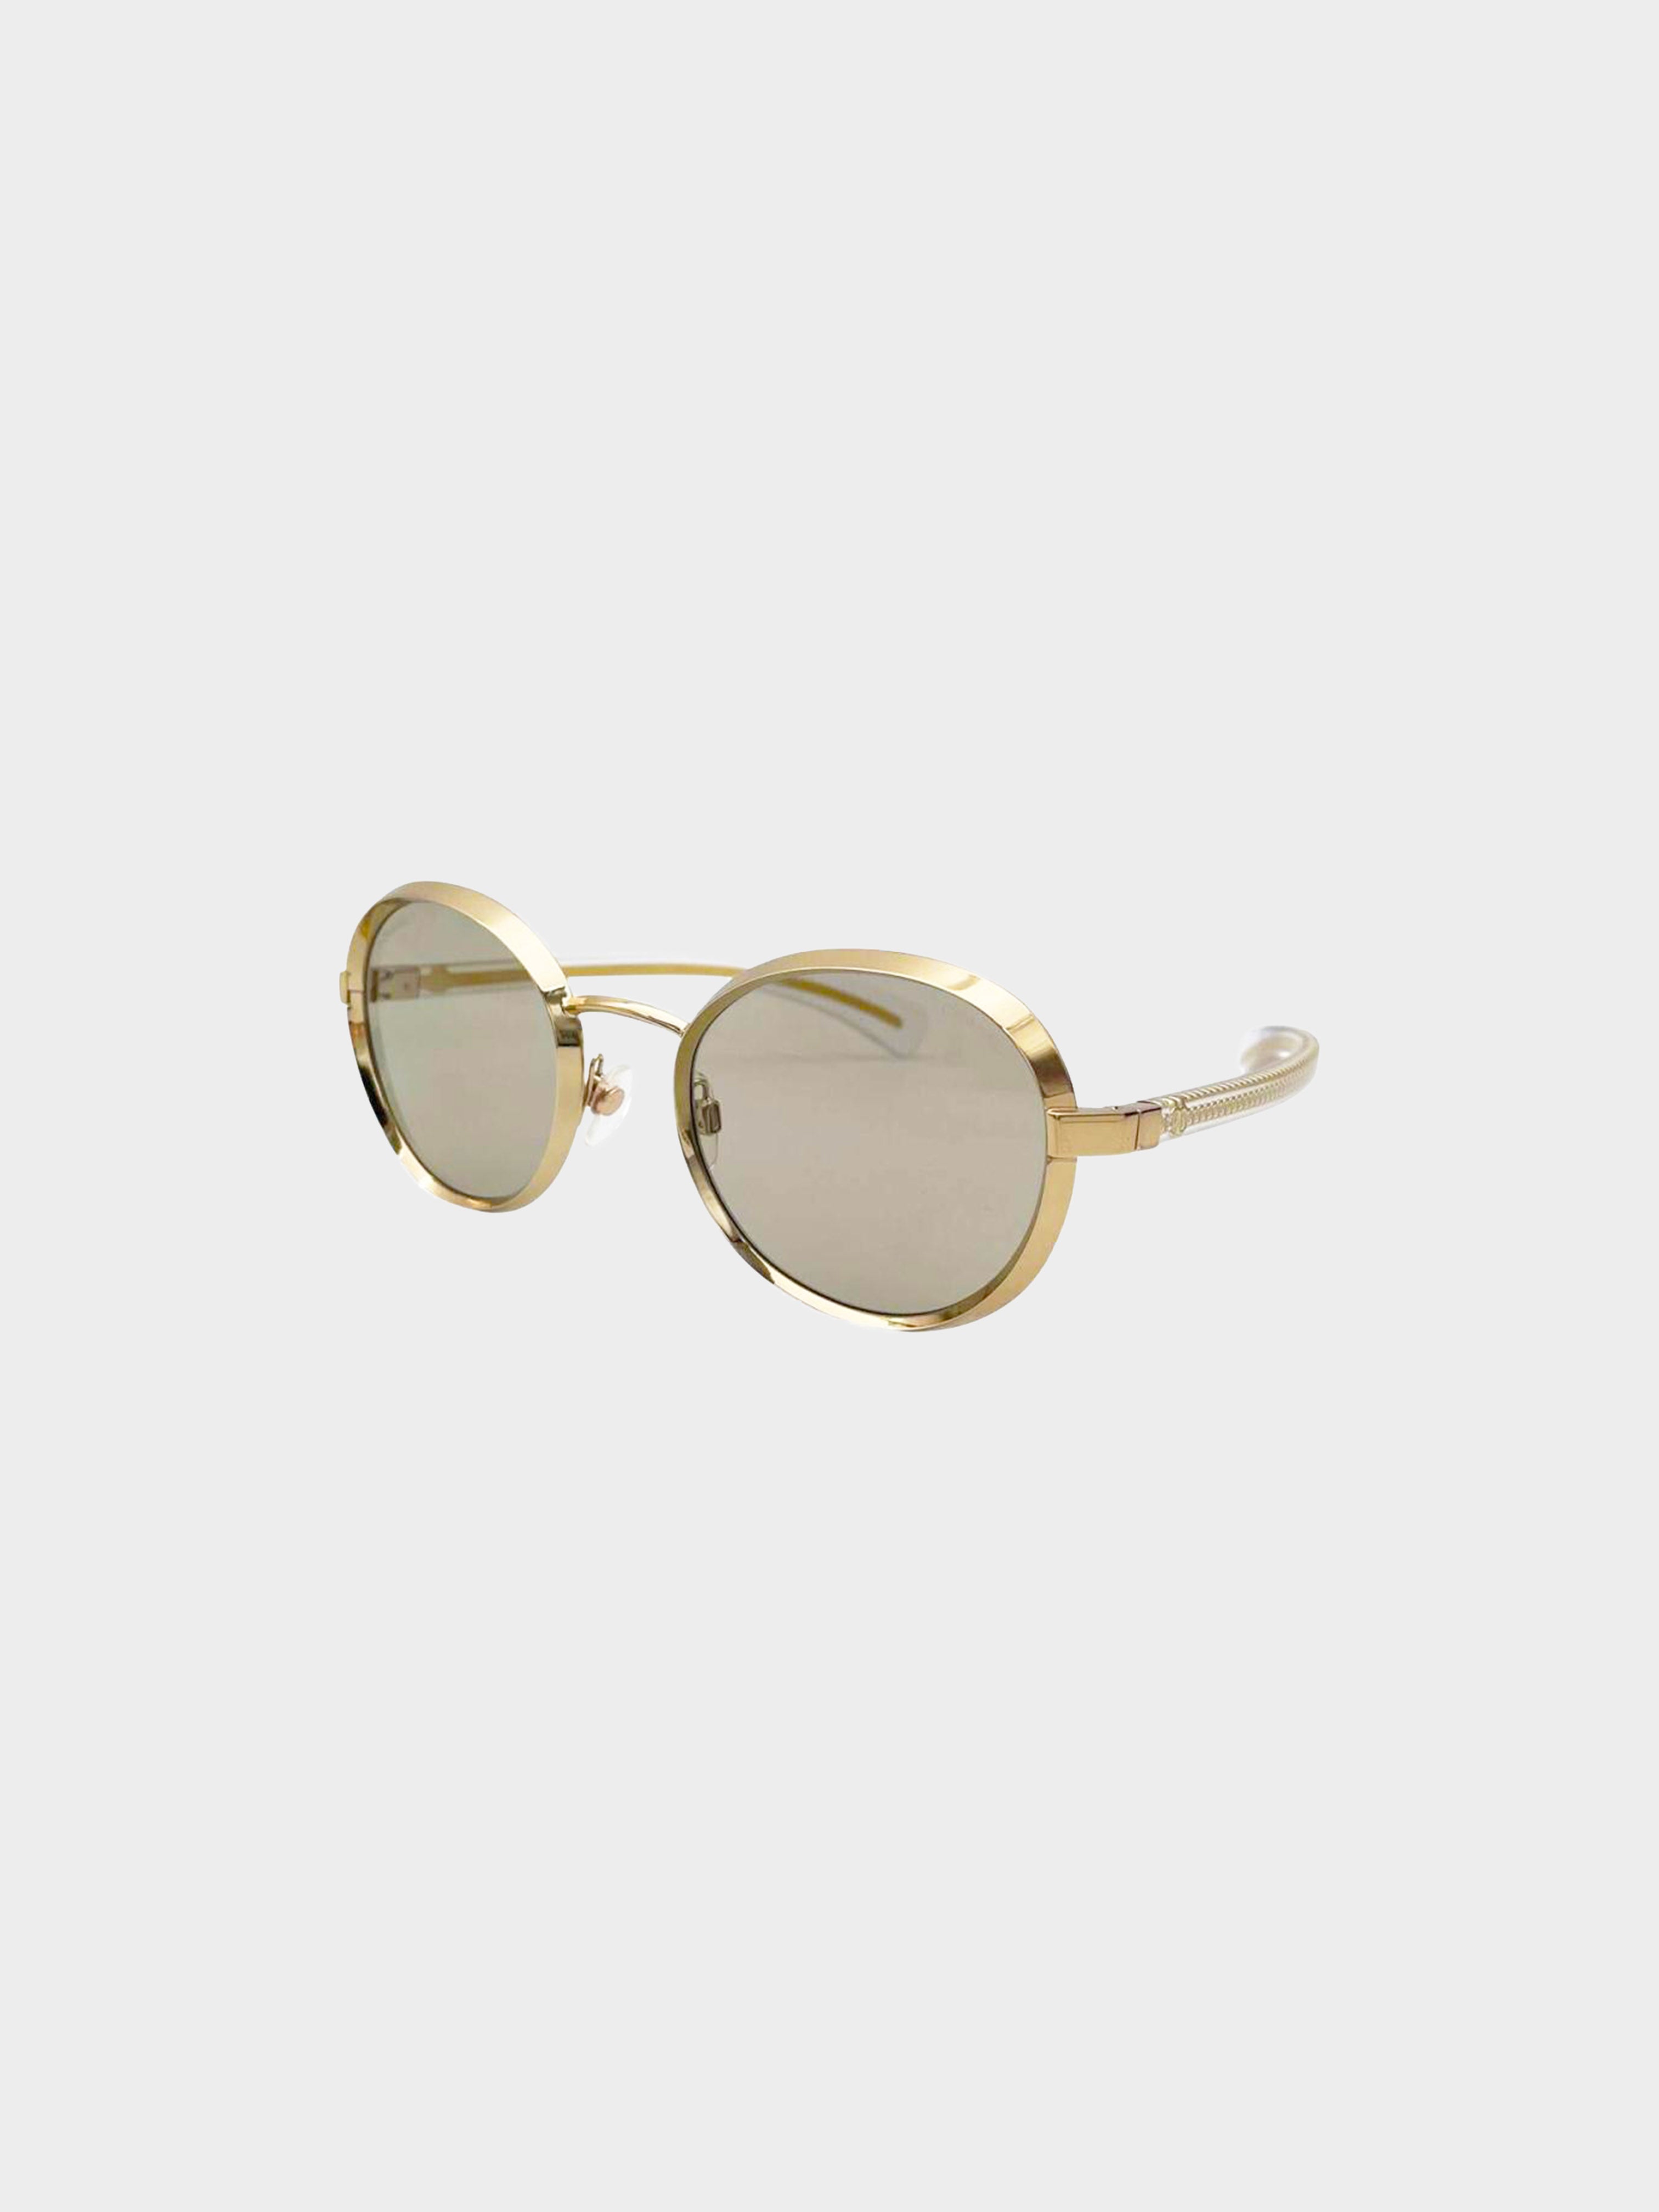 Chanel 2010s Gold Round Sunglasses · INTO